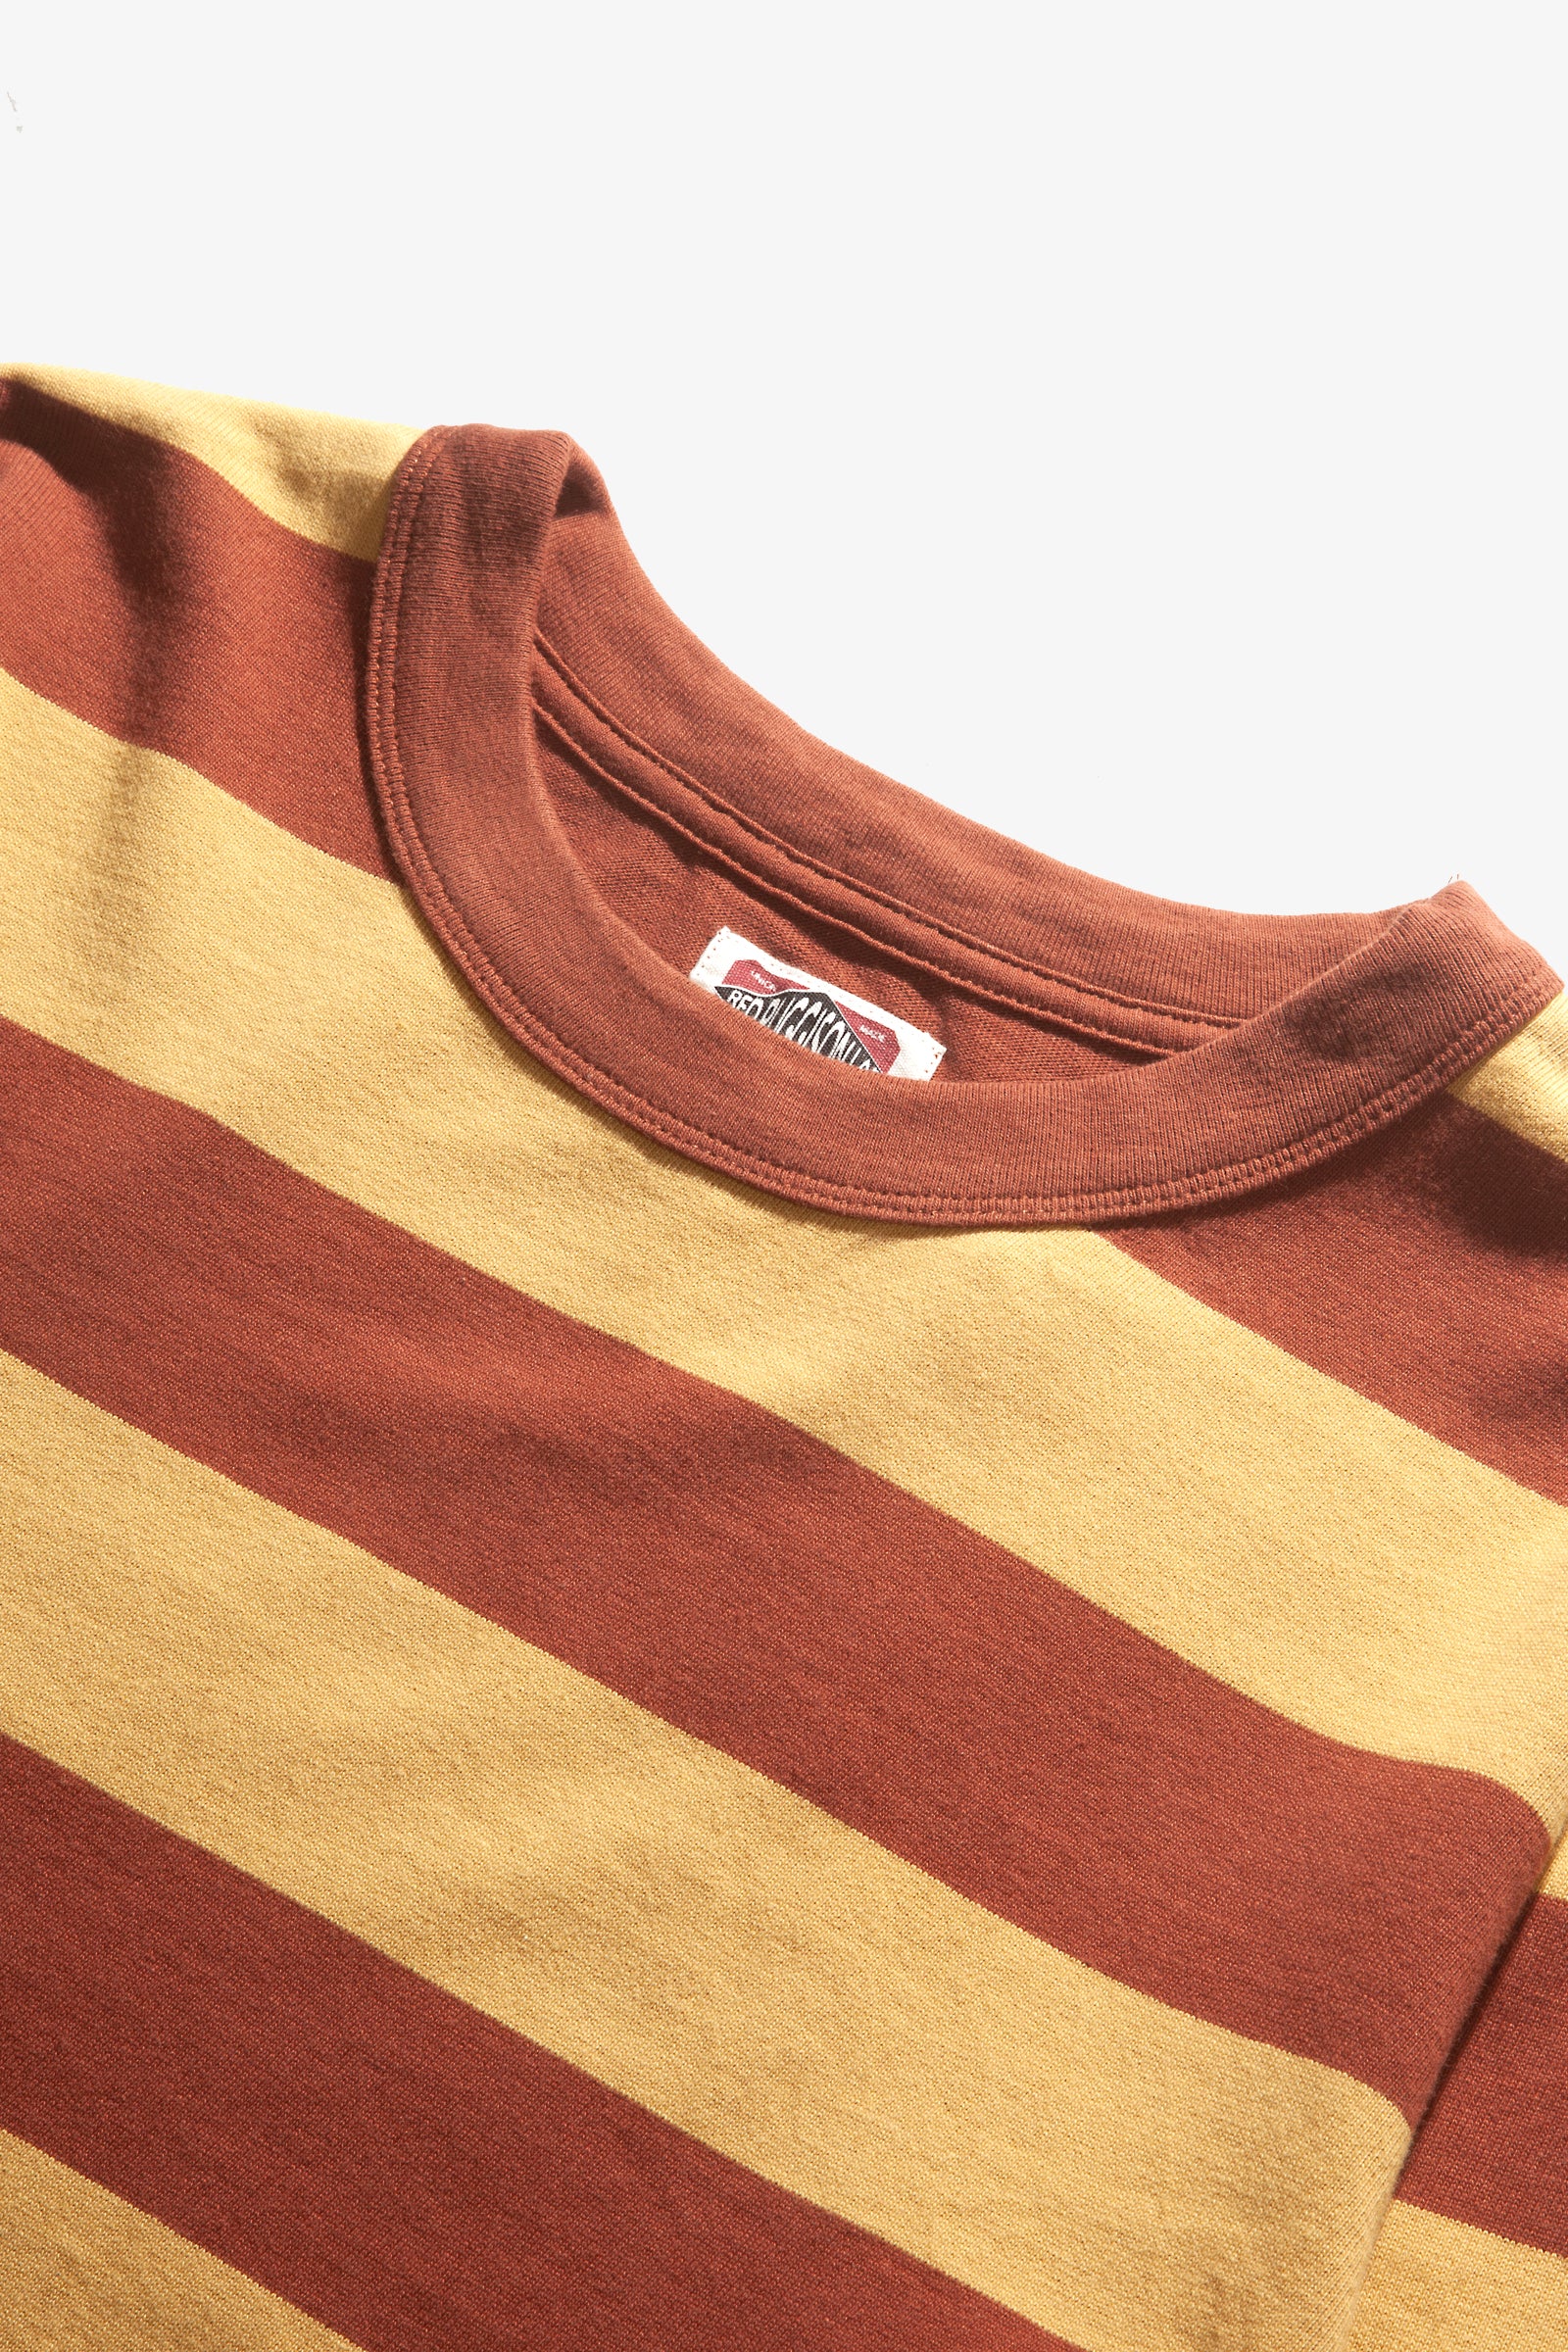 Red Ruggison - Border Long Sleeve T-Shirt - Yellow/Brown